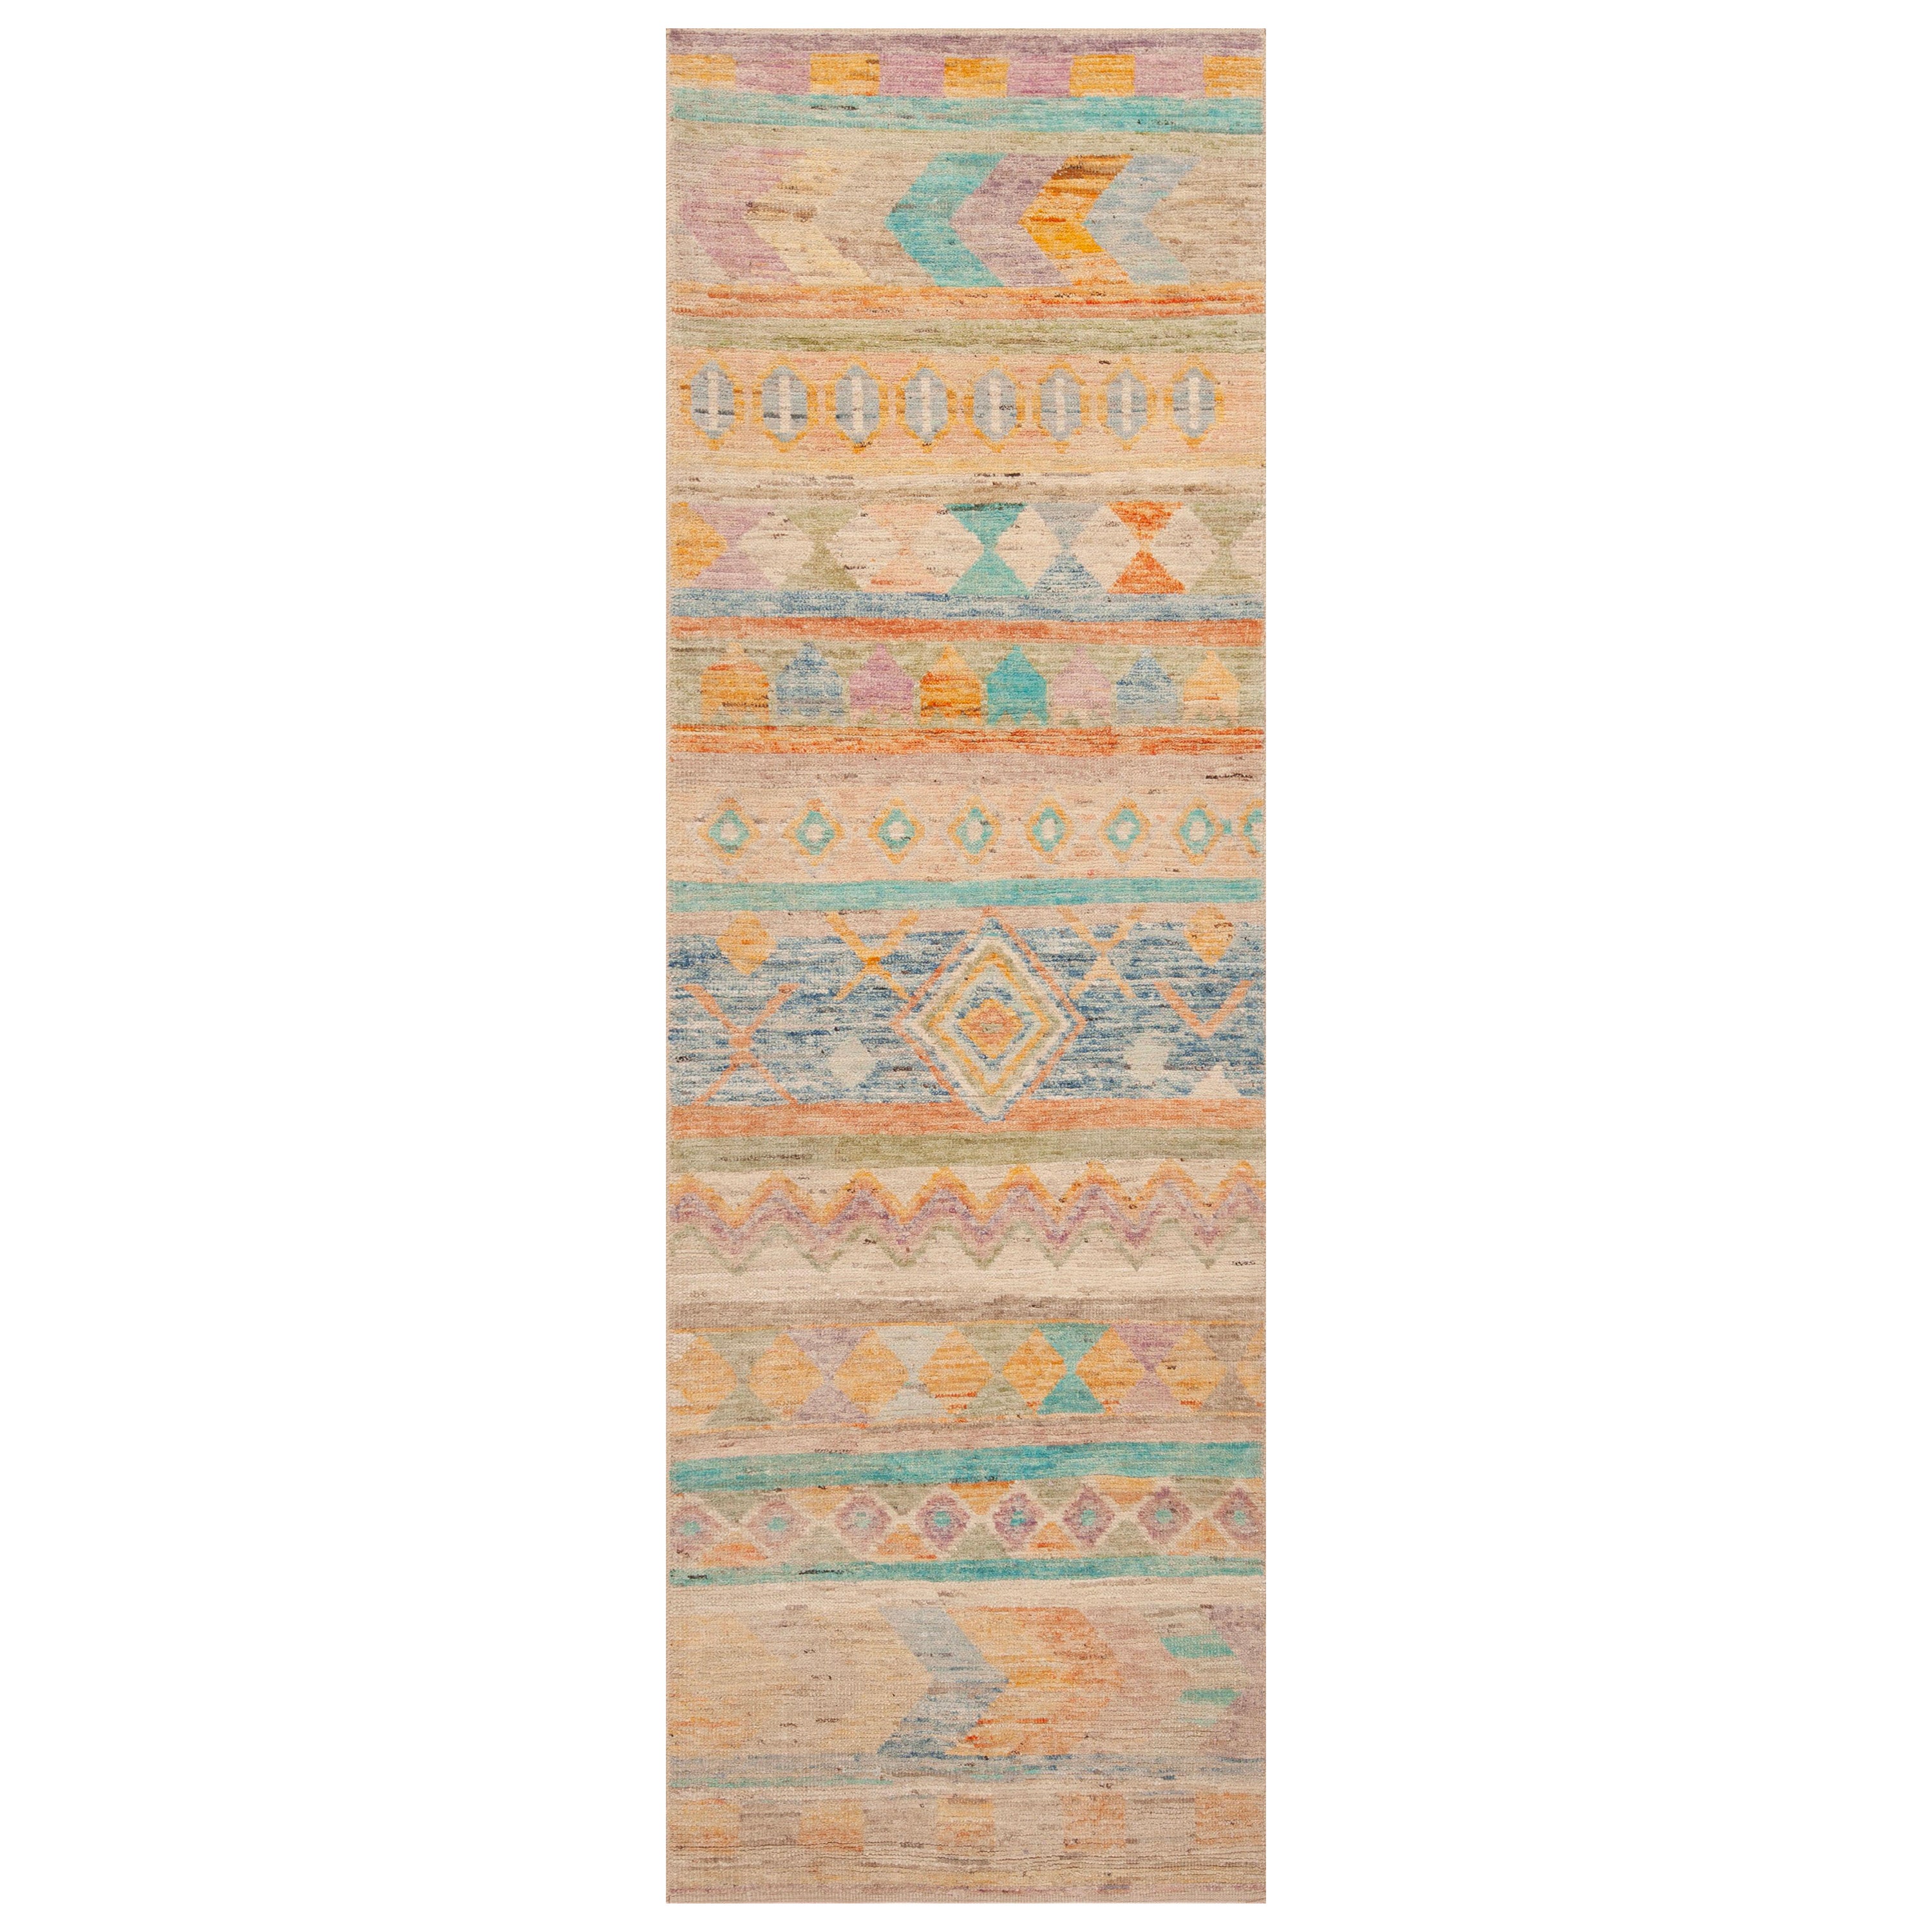 Nazmiyal Collection Rustic Tribal Geometric Modern Runner Rug 3' x 9'10" For Sale